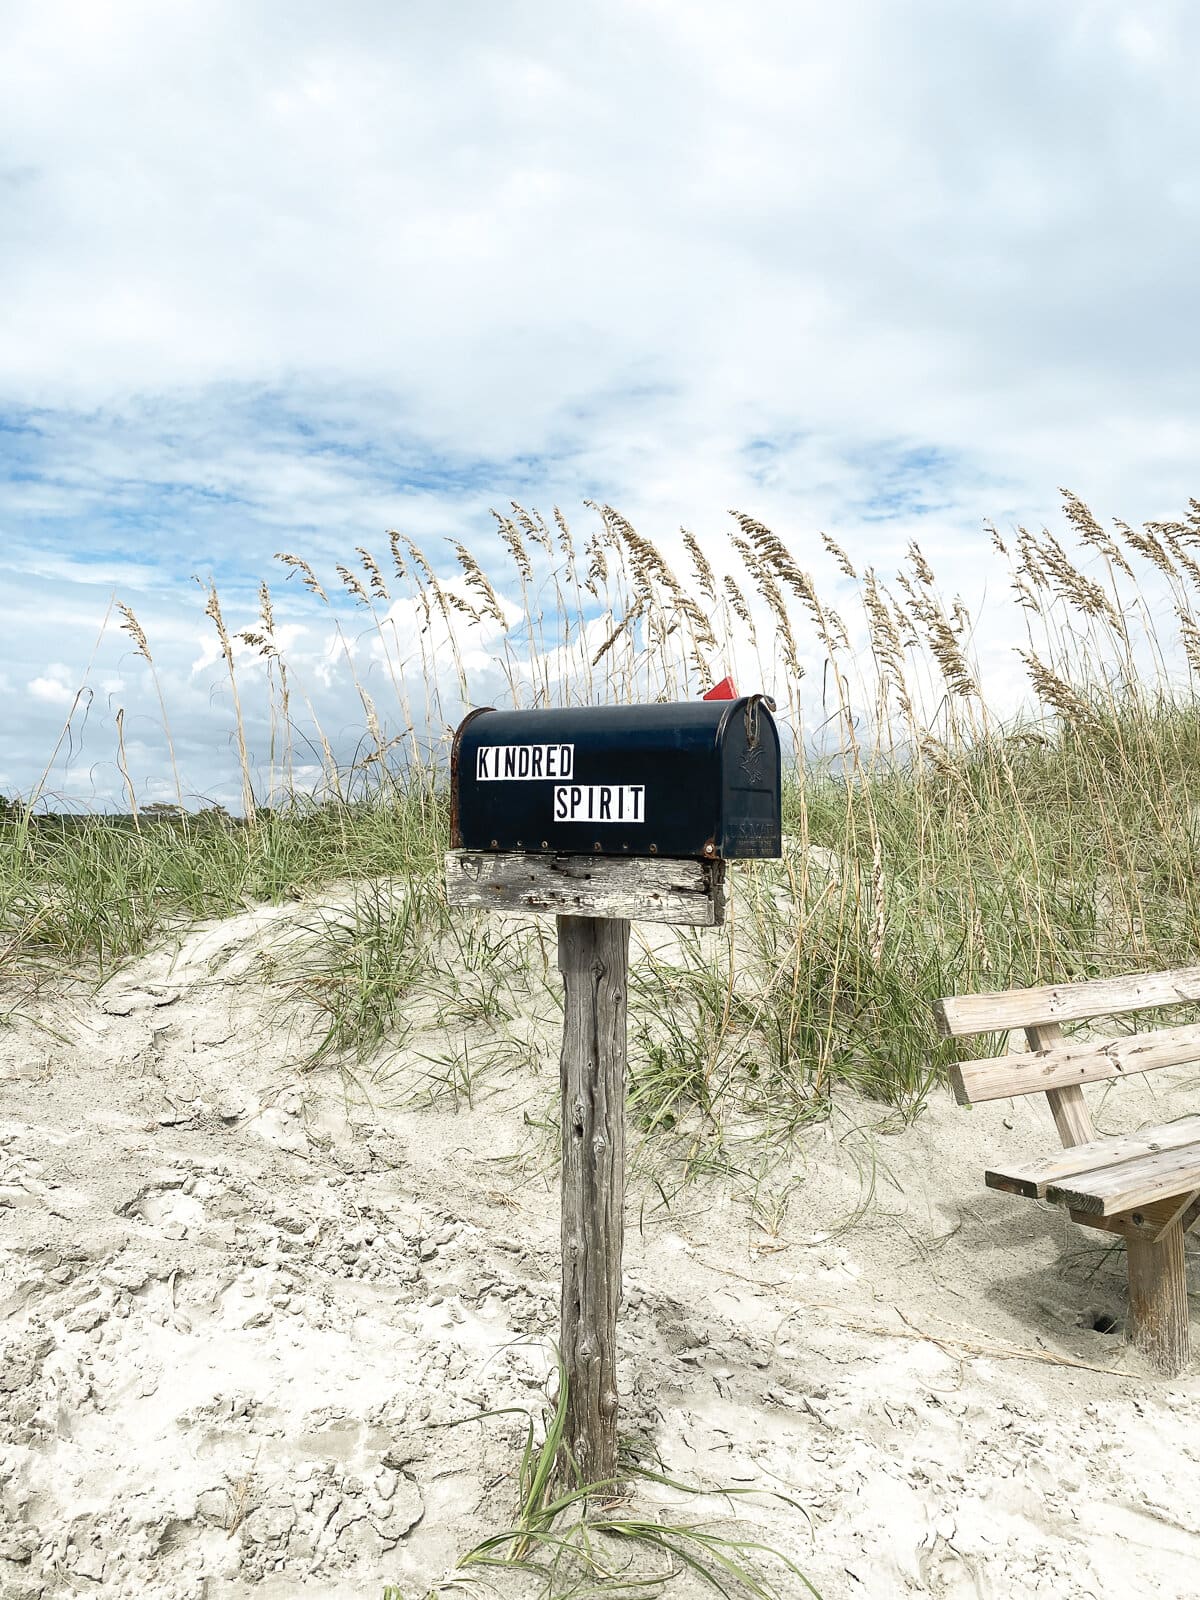 The Kindred Spirit Mailbox in Sunset Beach North Carolina